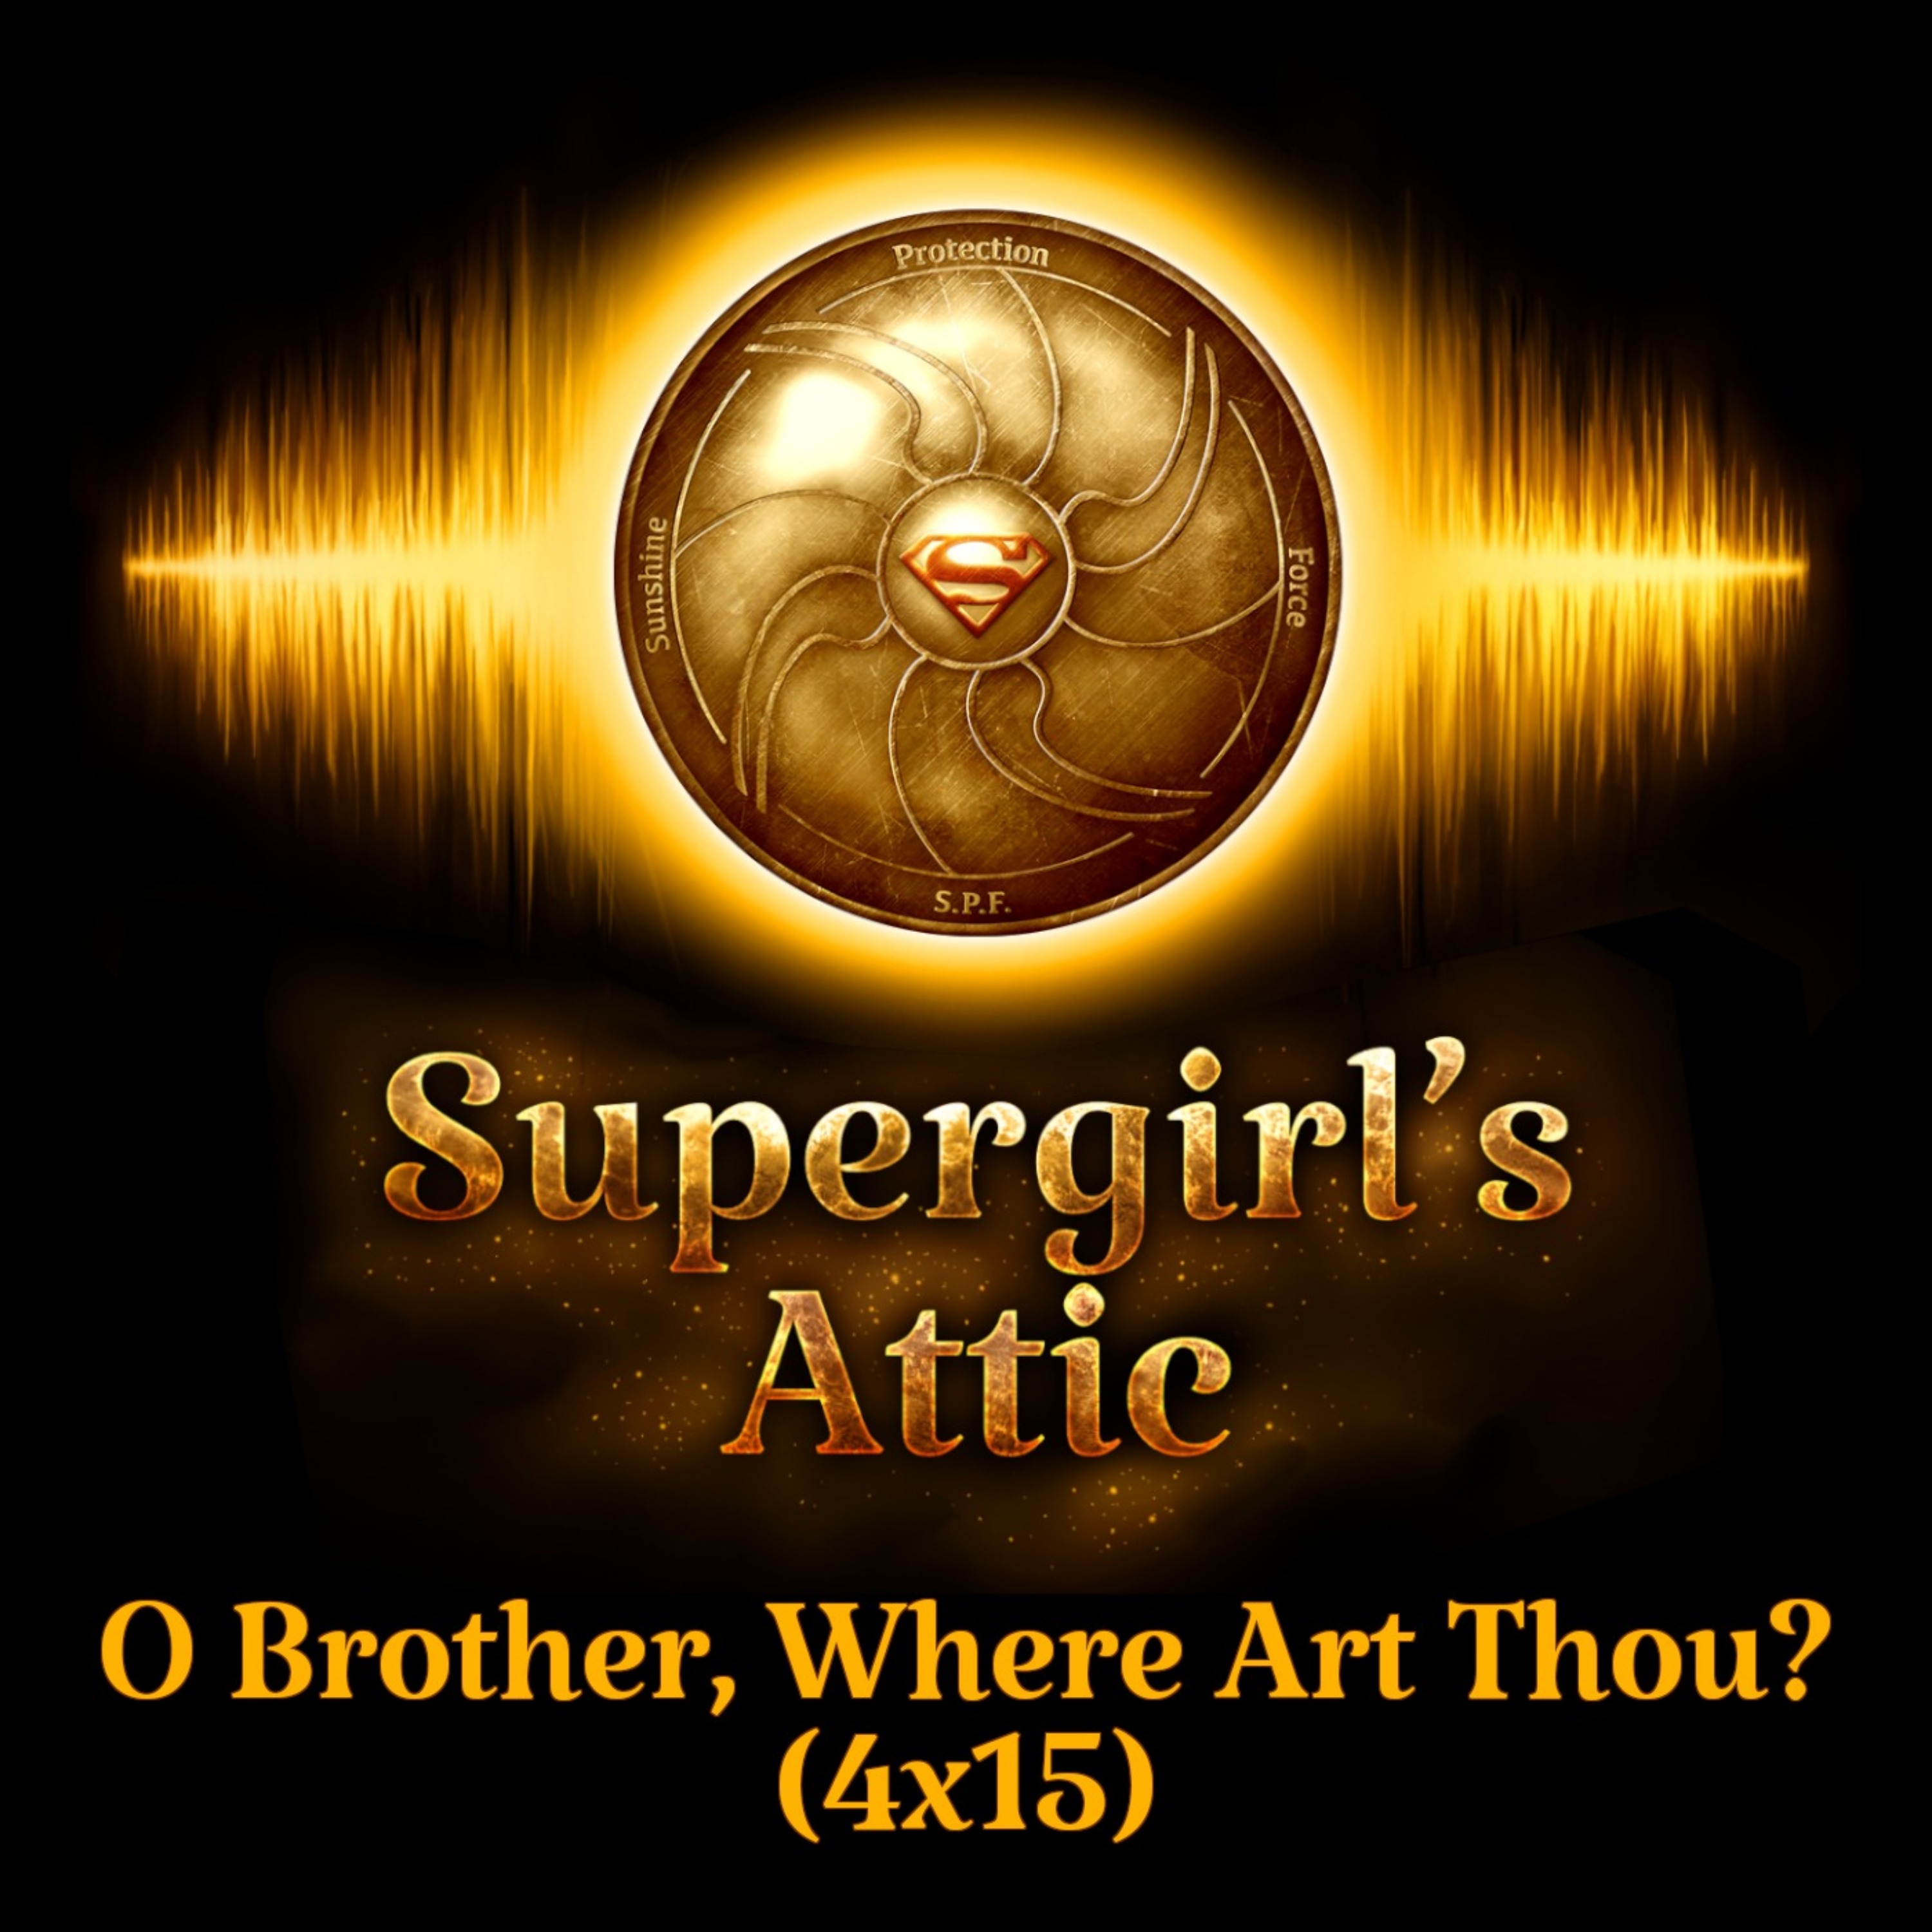 O Brother Where Art Thou (4x15)